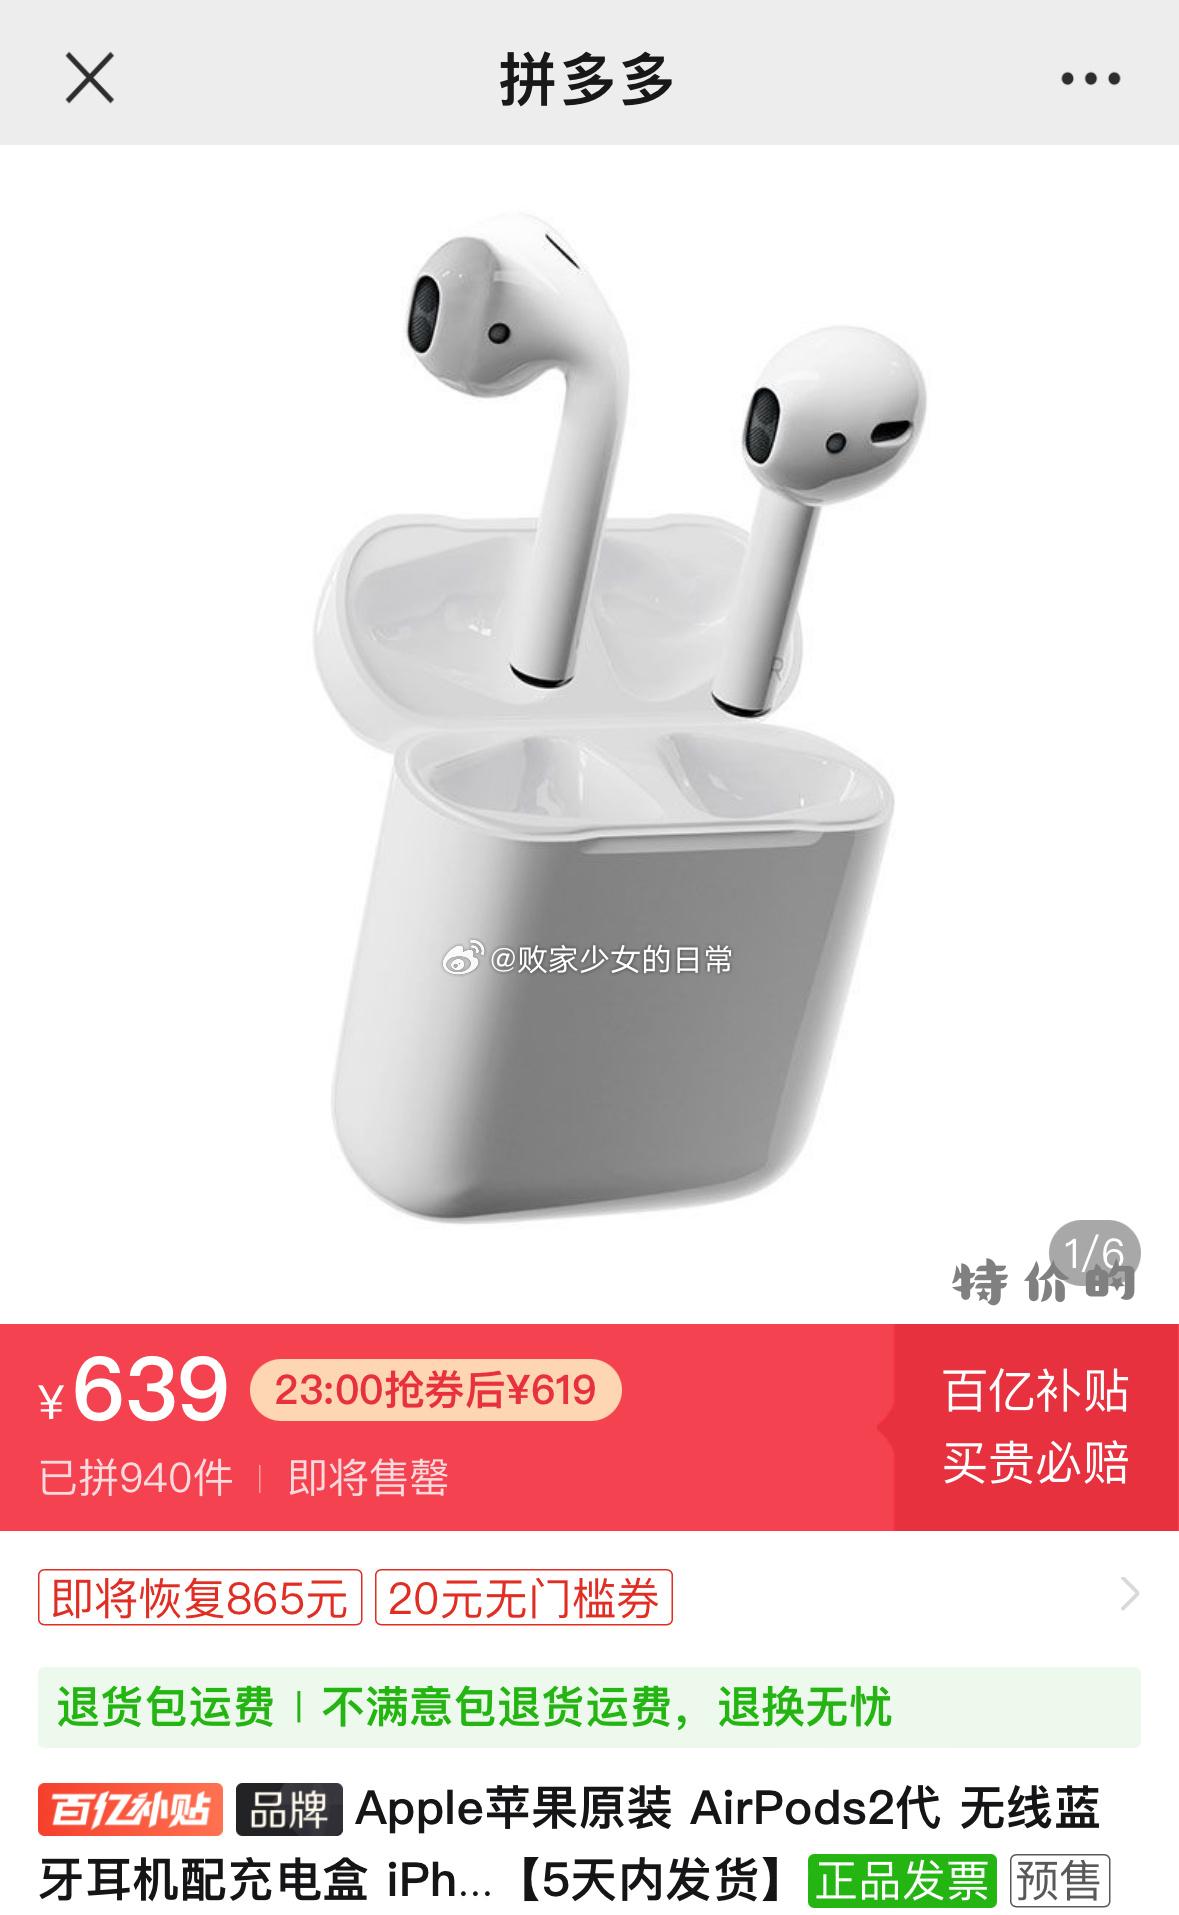 Apple苹果原装 AirPods2代 无线蓝牙耳机配充电盒 23点 领20元无门槛劵 - 特价的